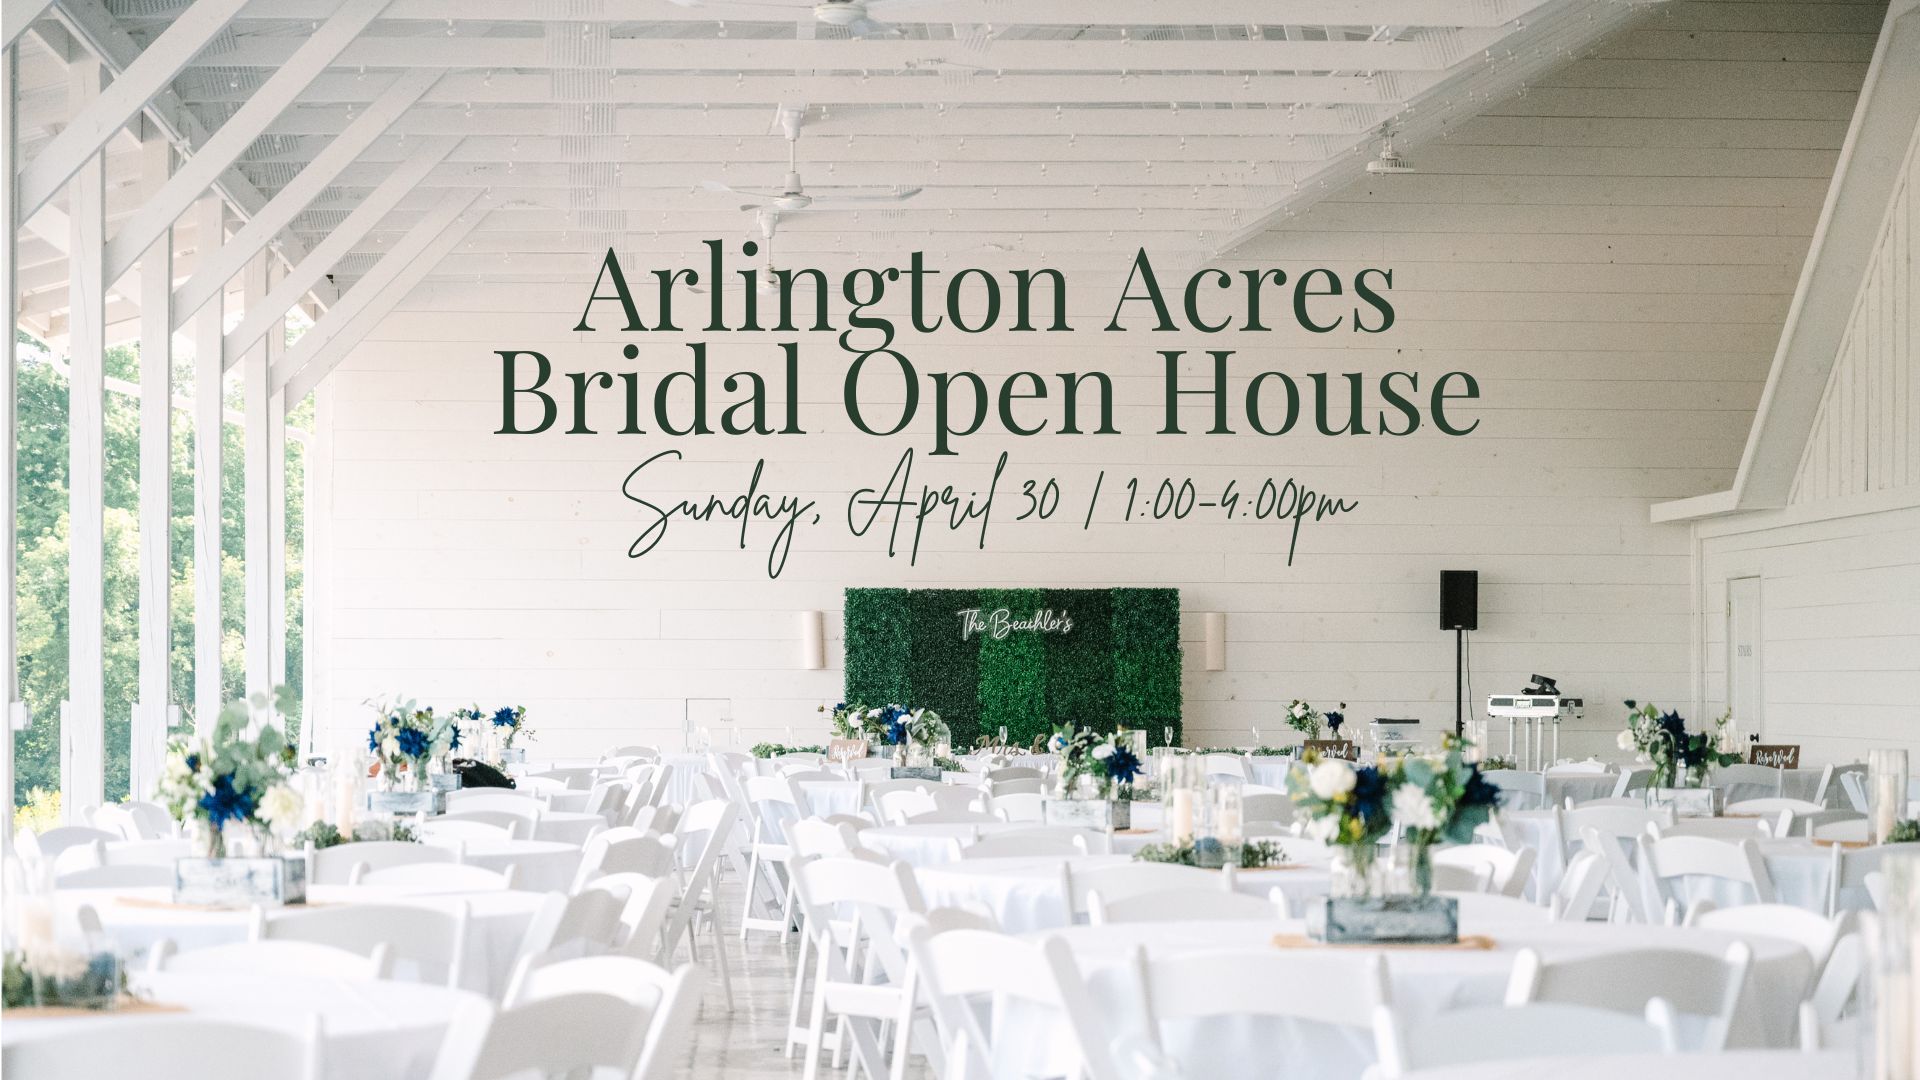 Arlington Acres Bridal Open House